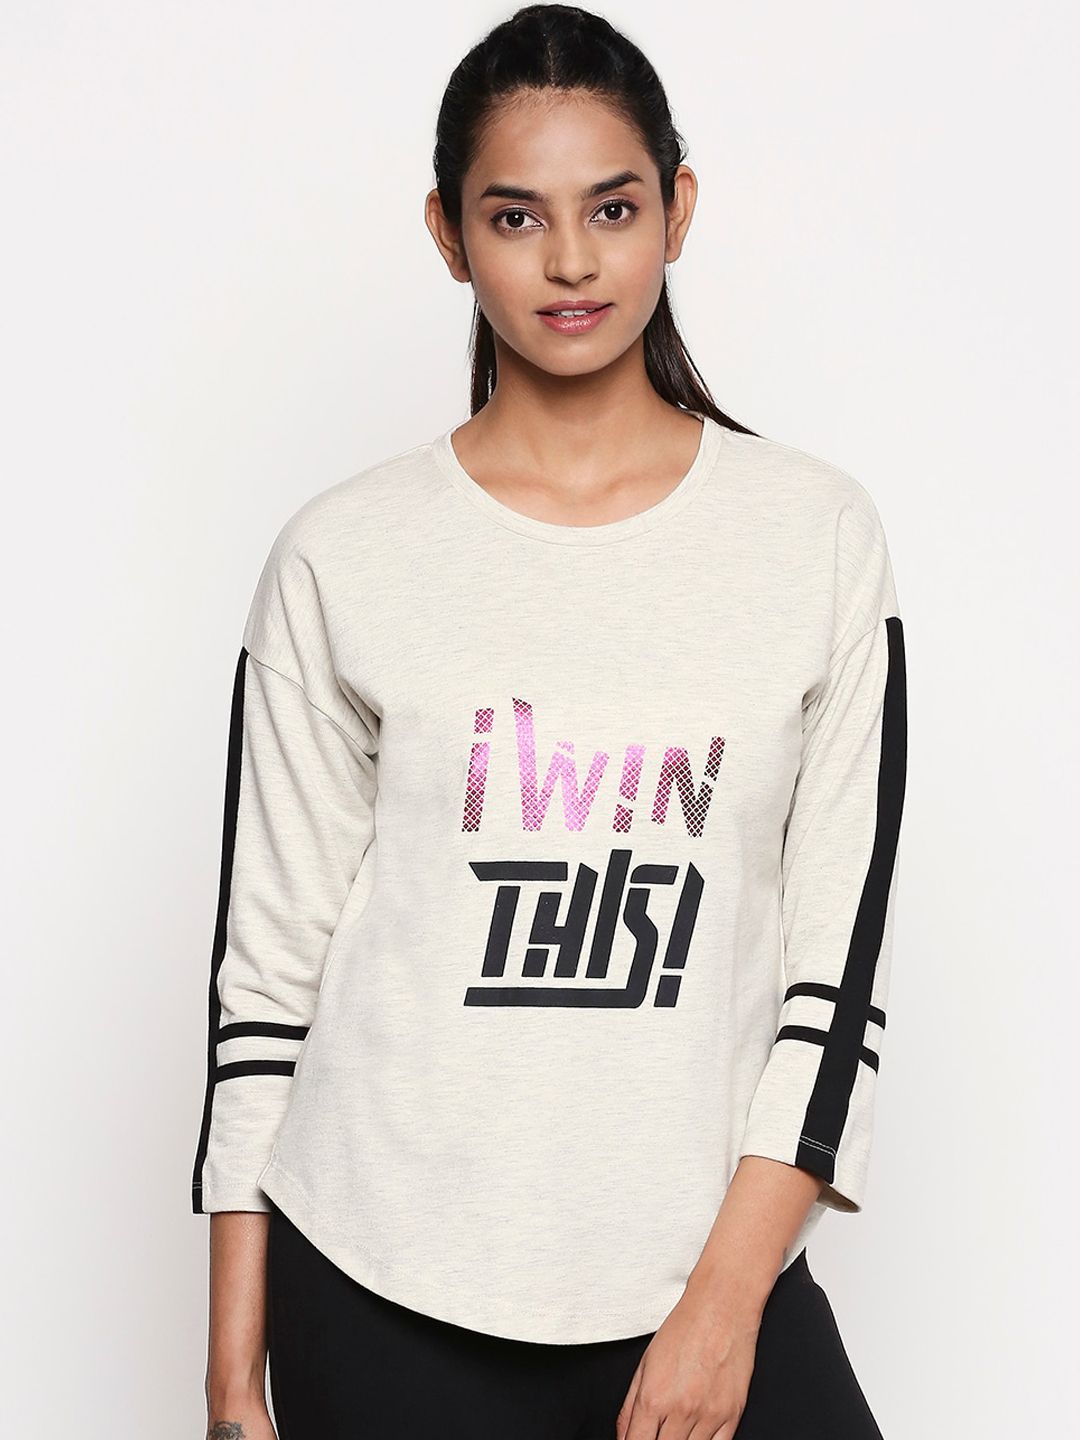 Ajile by Pantaloons Women Grey & Black Printed Sweatshirt Price in India